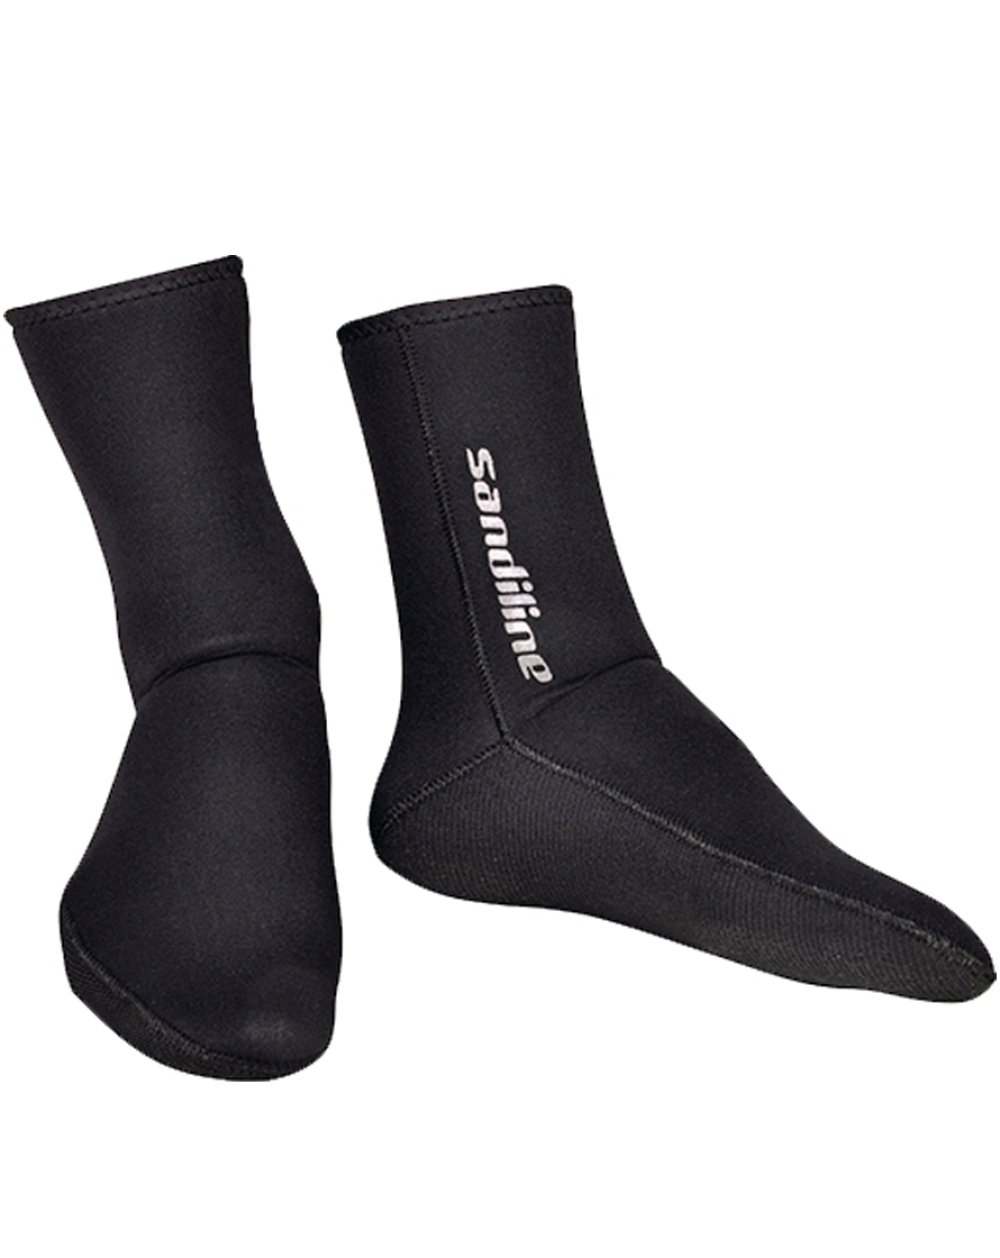 SANDILINE Socks Splash 30 - Gr. 34/35